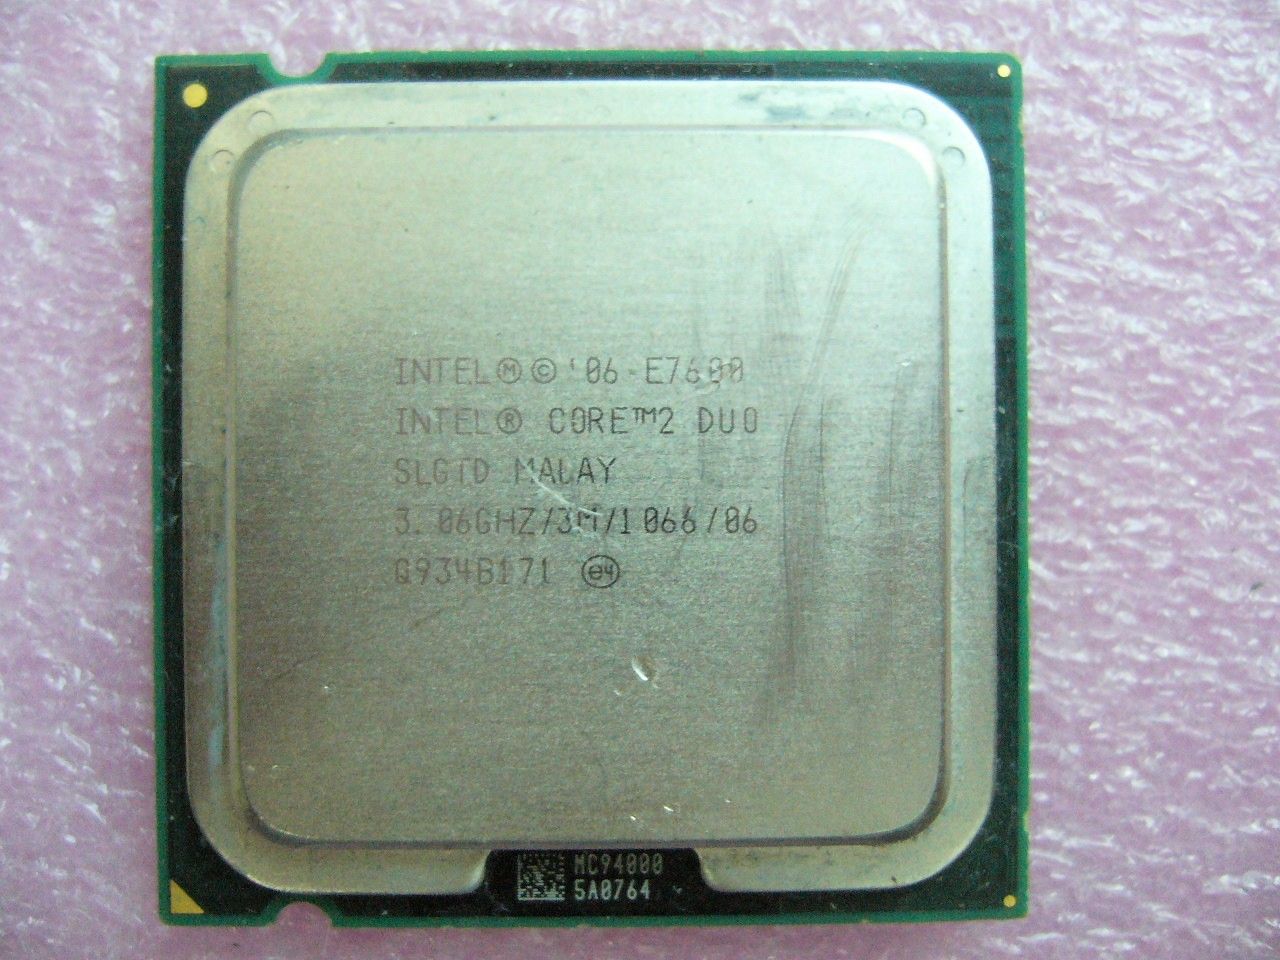 INTEL Core 2 Duo E7600 CPU 3.06GHz 3MB/1066Mhz LGA775 SLGTD